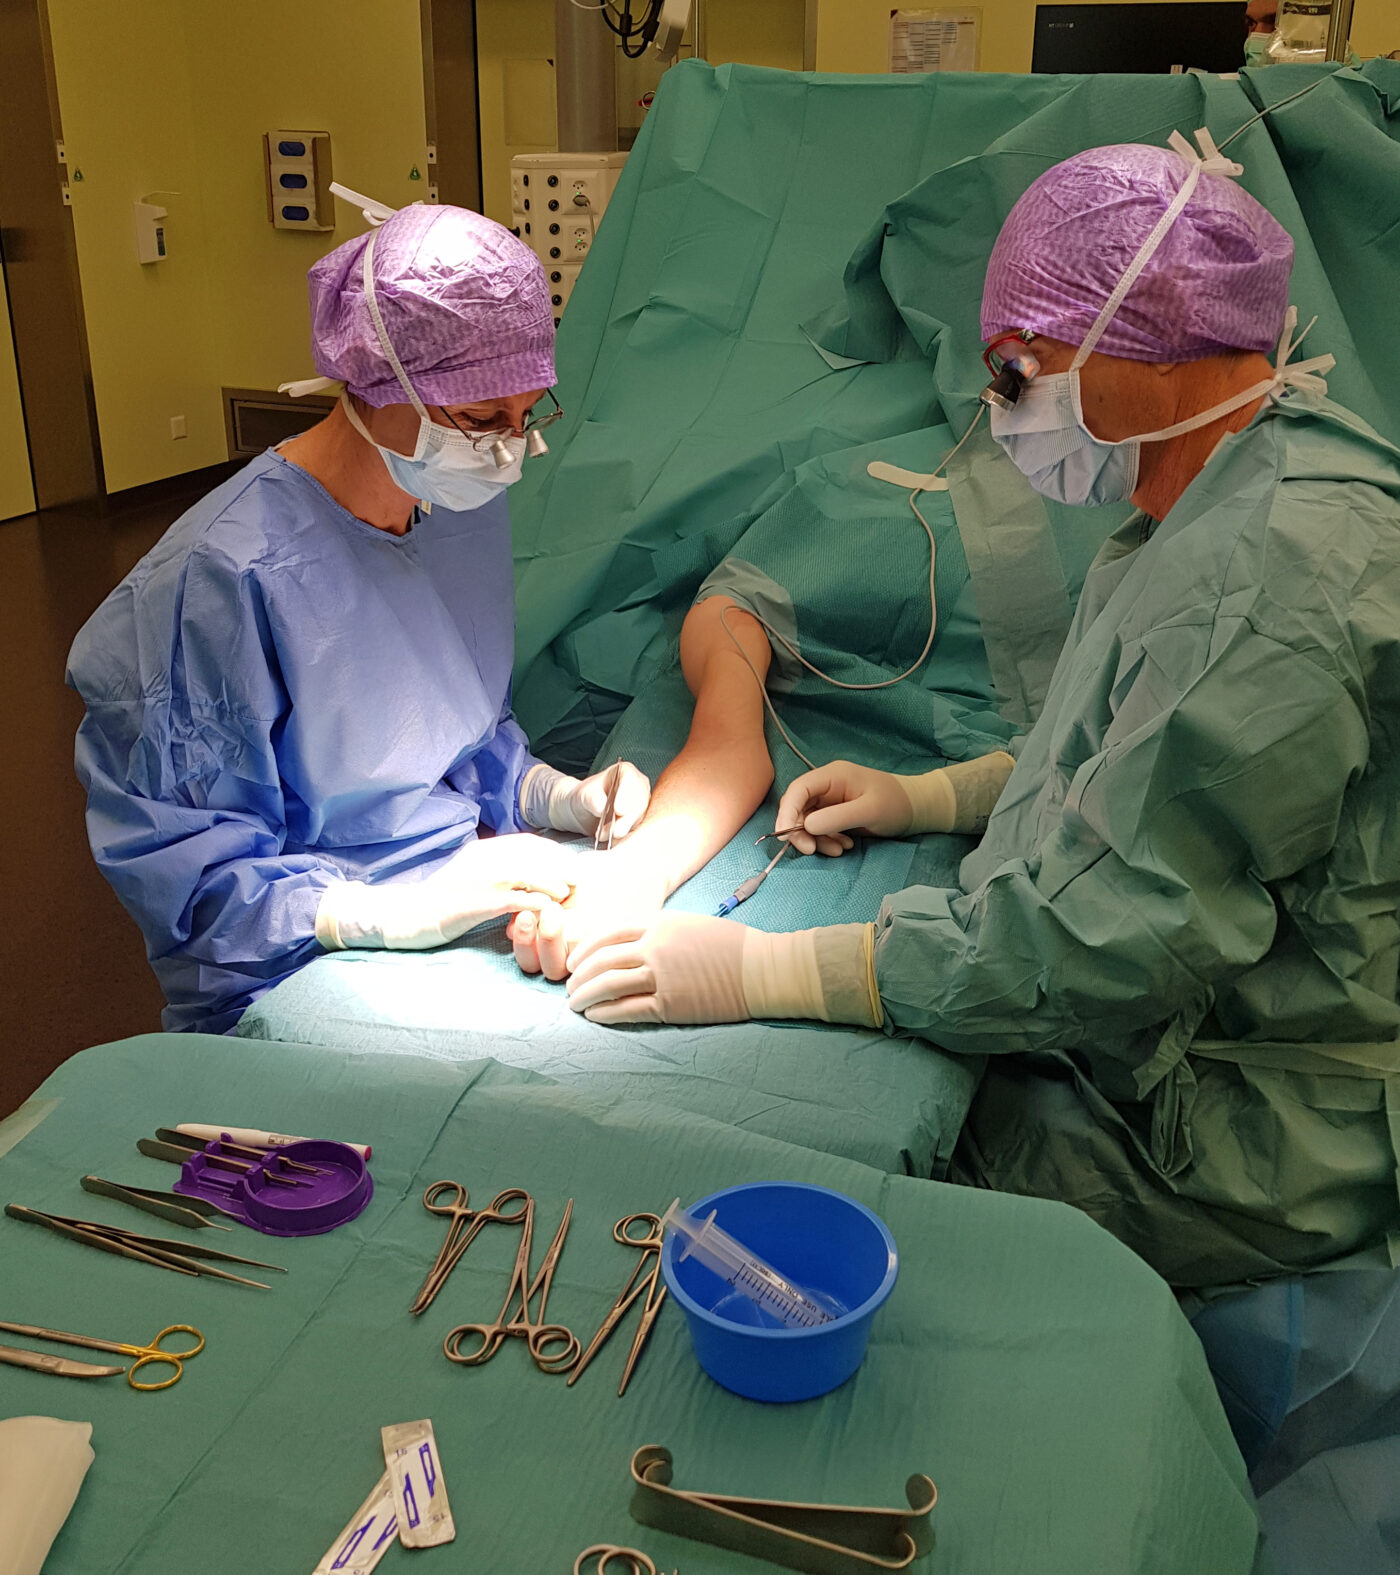 Operation Tetrahandchiurgie